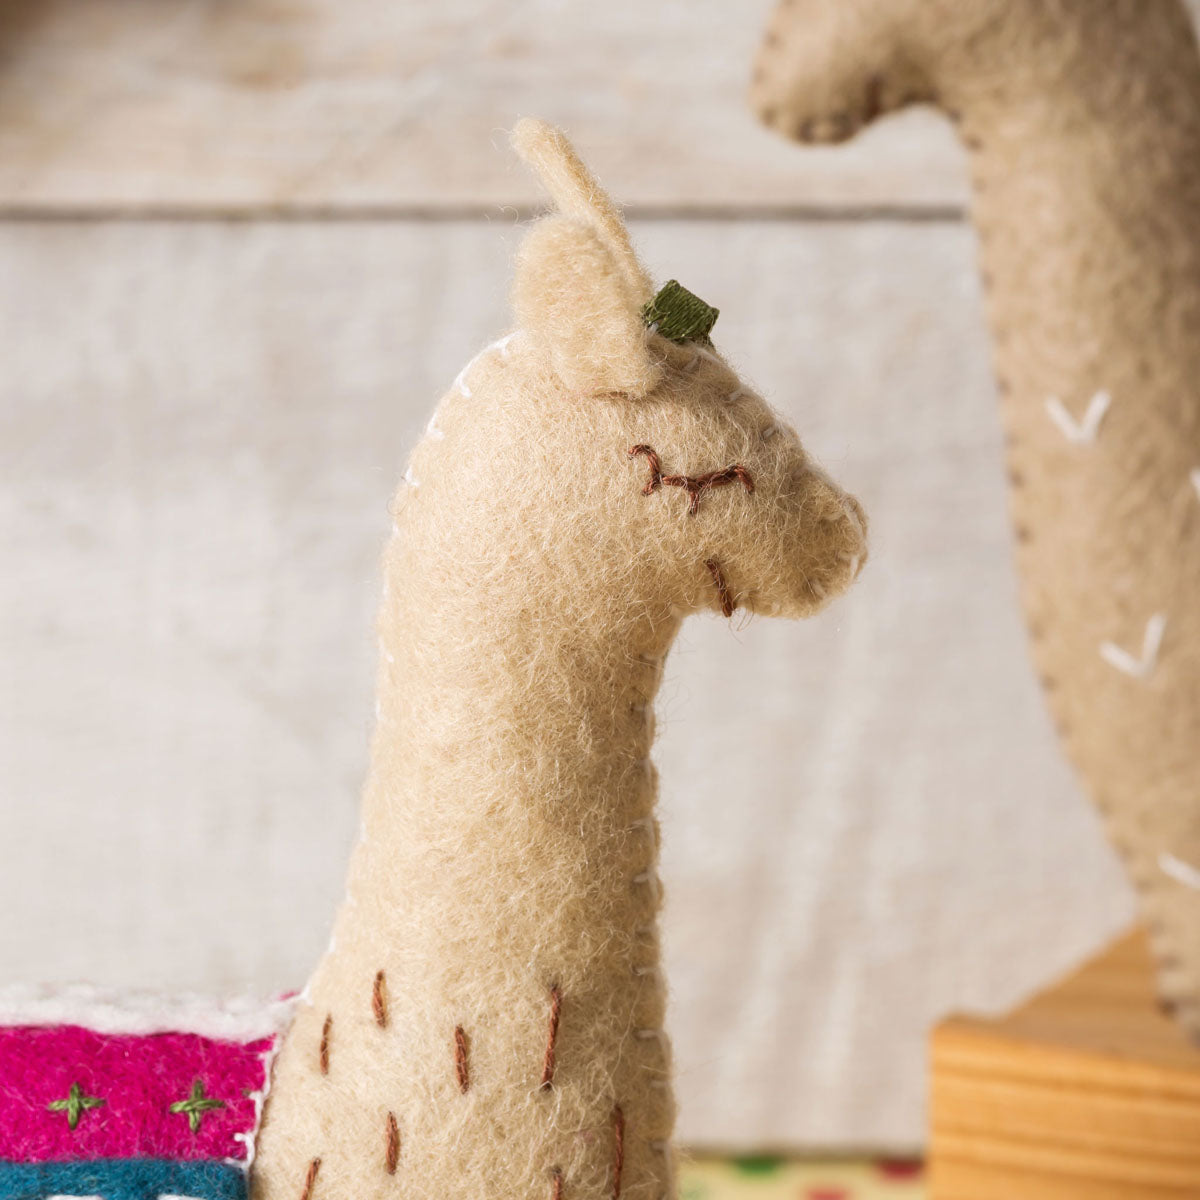 Hand Stitched Felt Craft Kit - Three Llamas